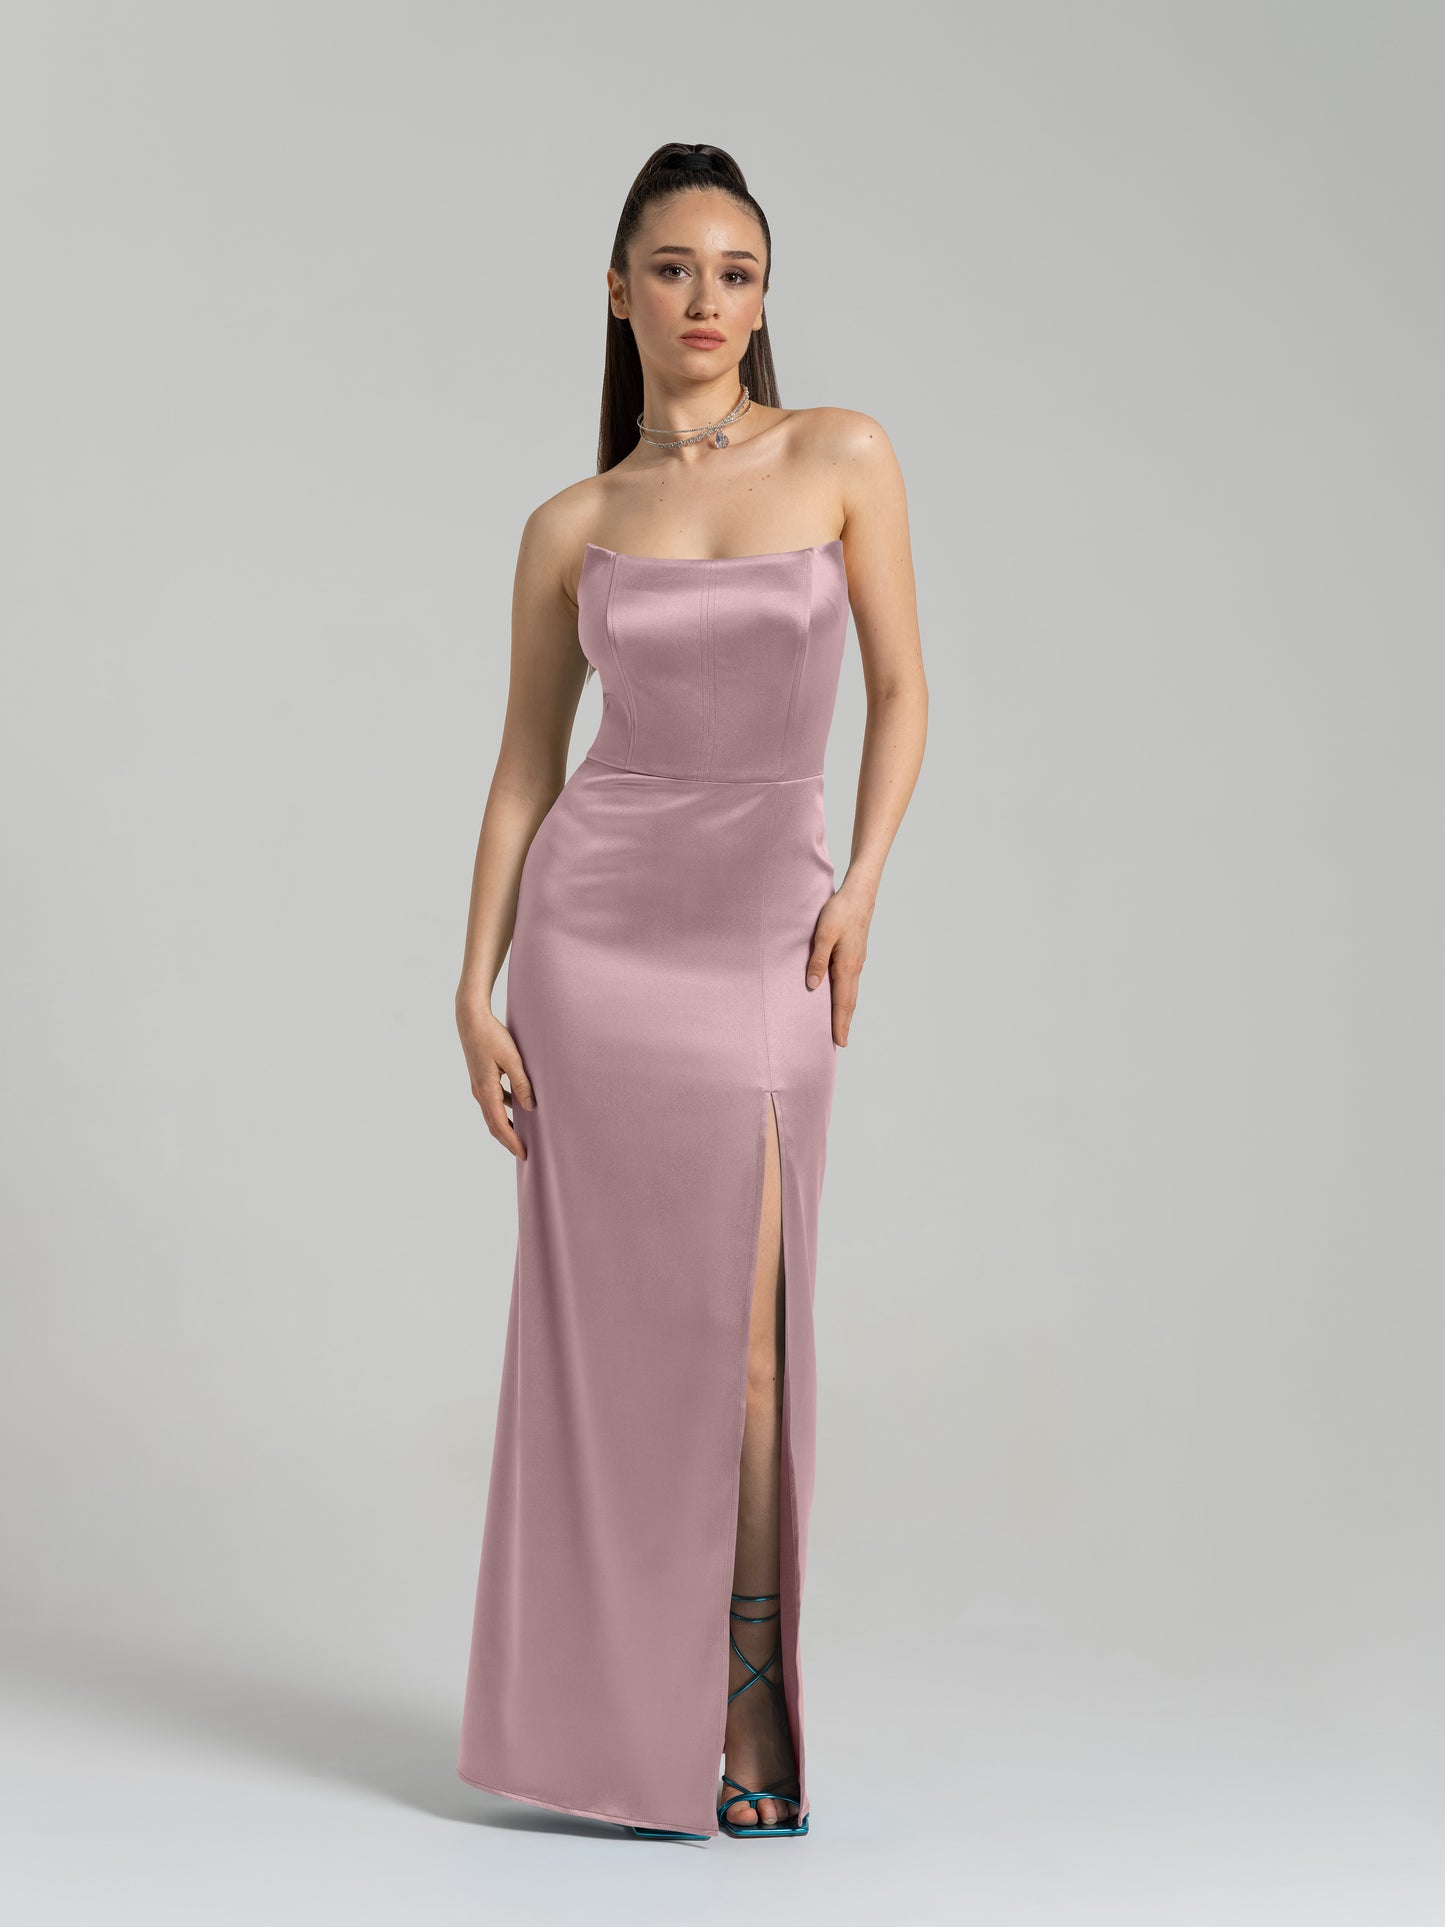 Queen of Hearts Satin Maxi Dress - Soft Pink by Tia Dorraine Women's Luxury Fashion Designer Clothing Brand